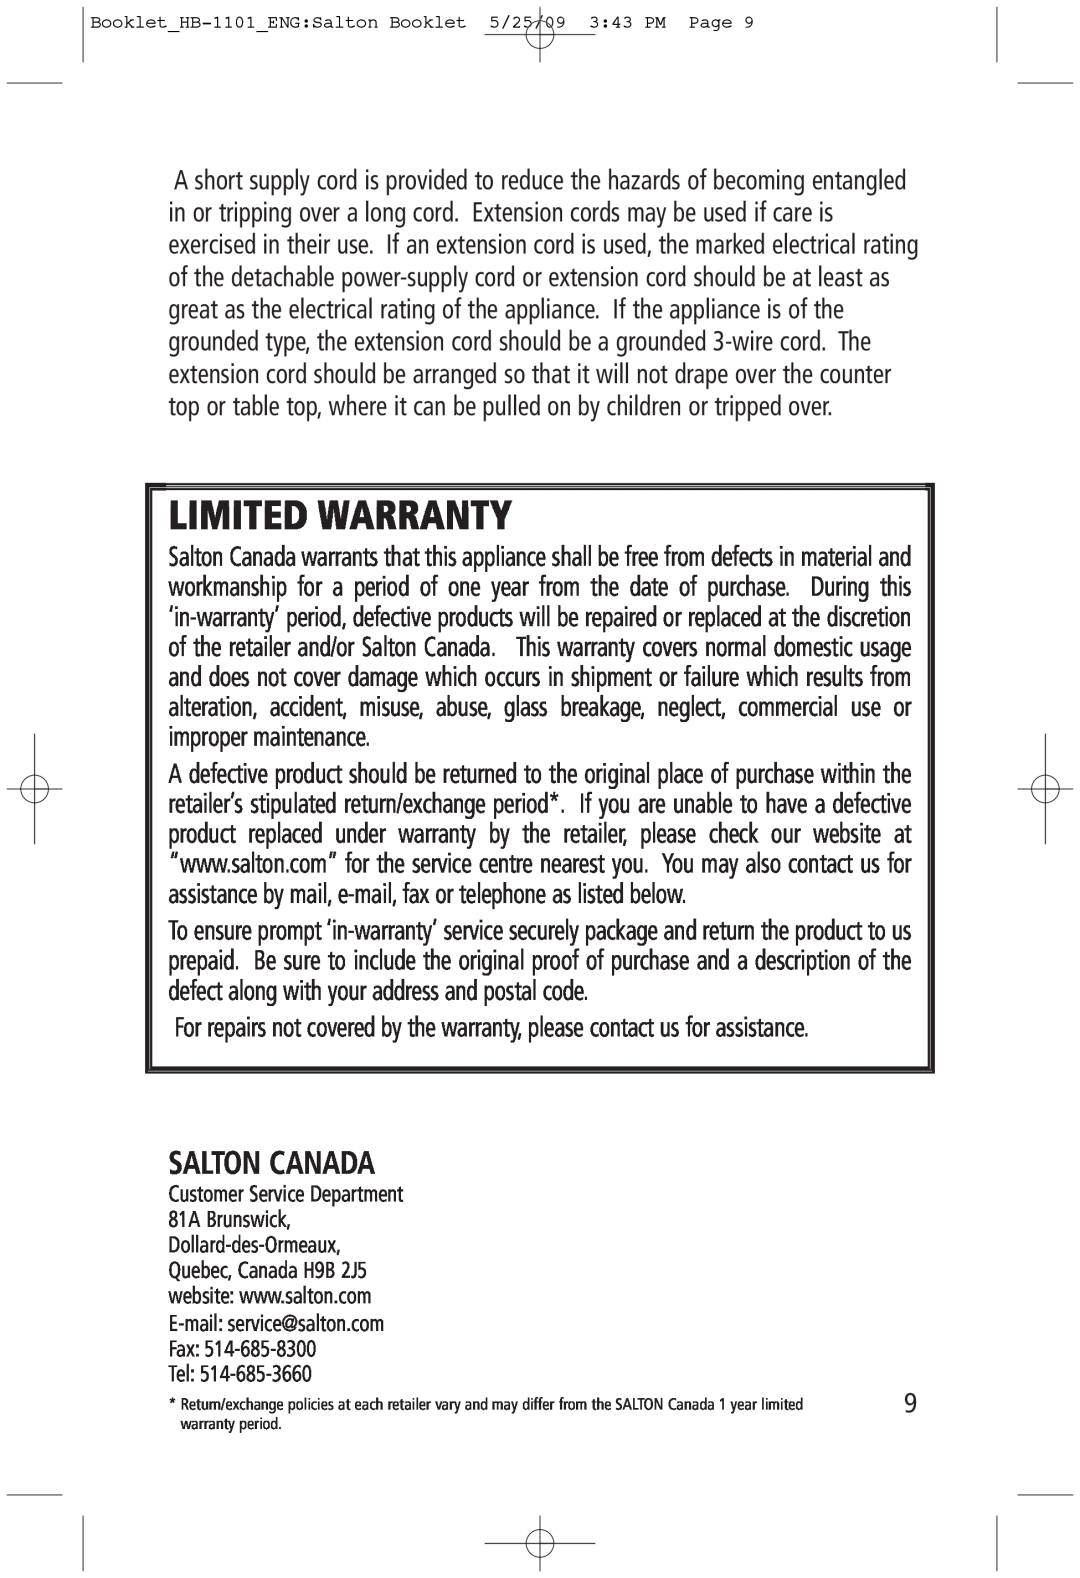 Salton HB-1101 manual Salton Canada, Limited Warranty 